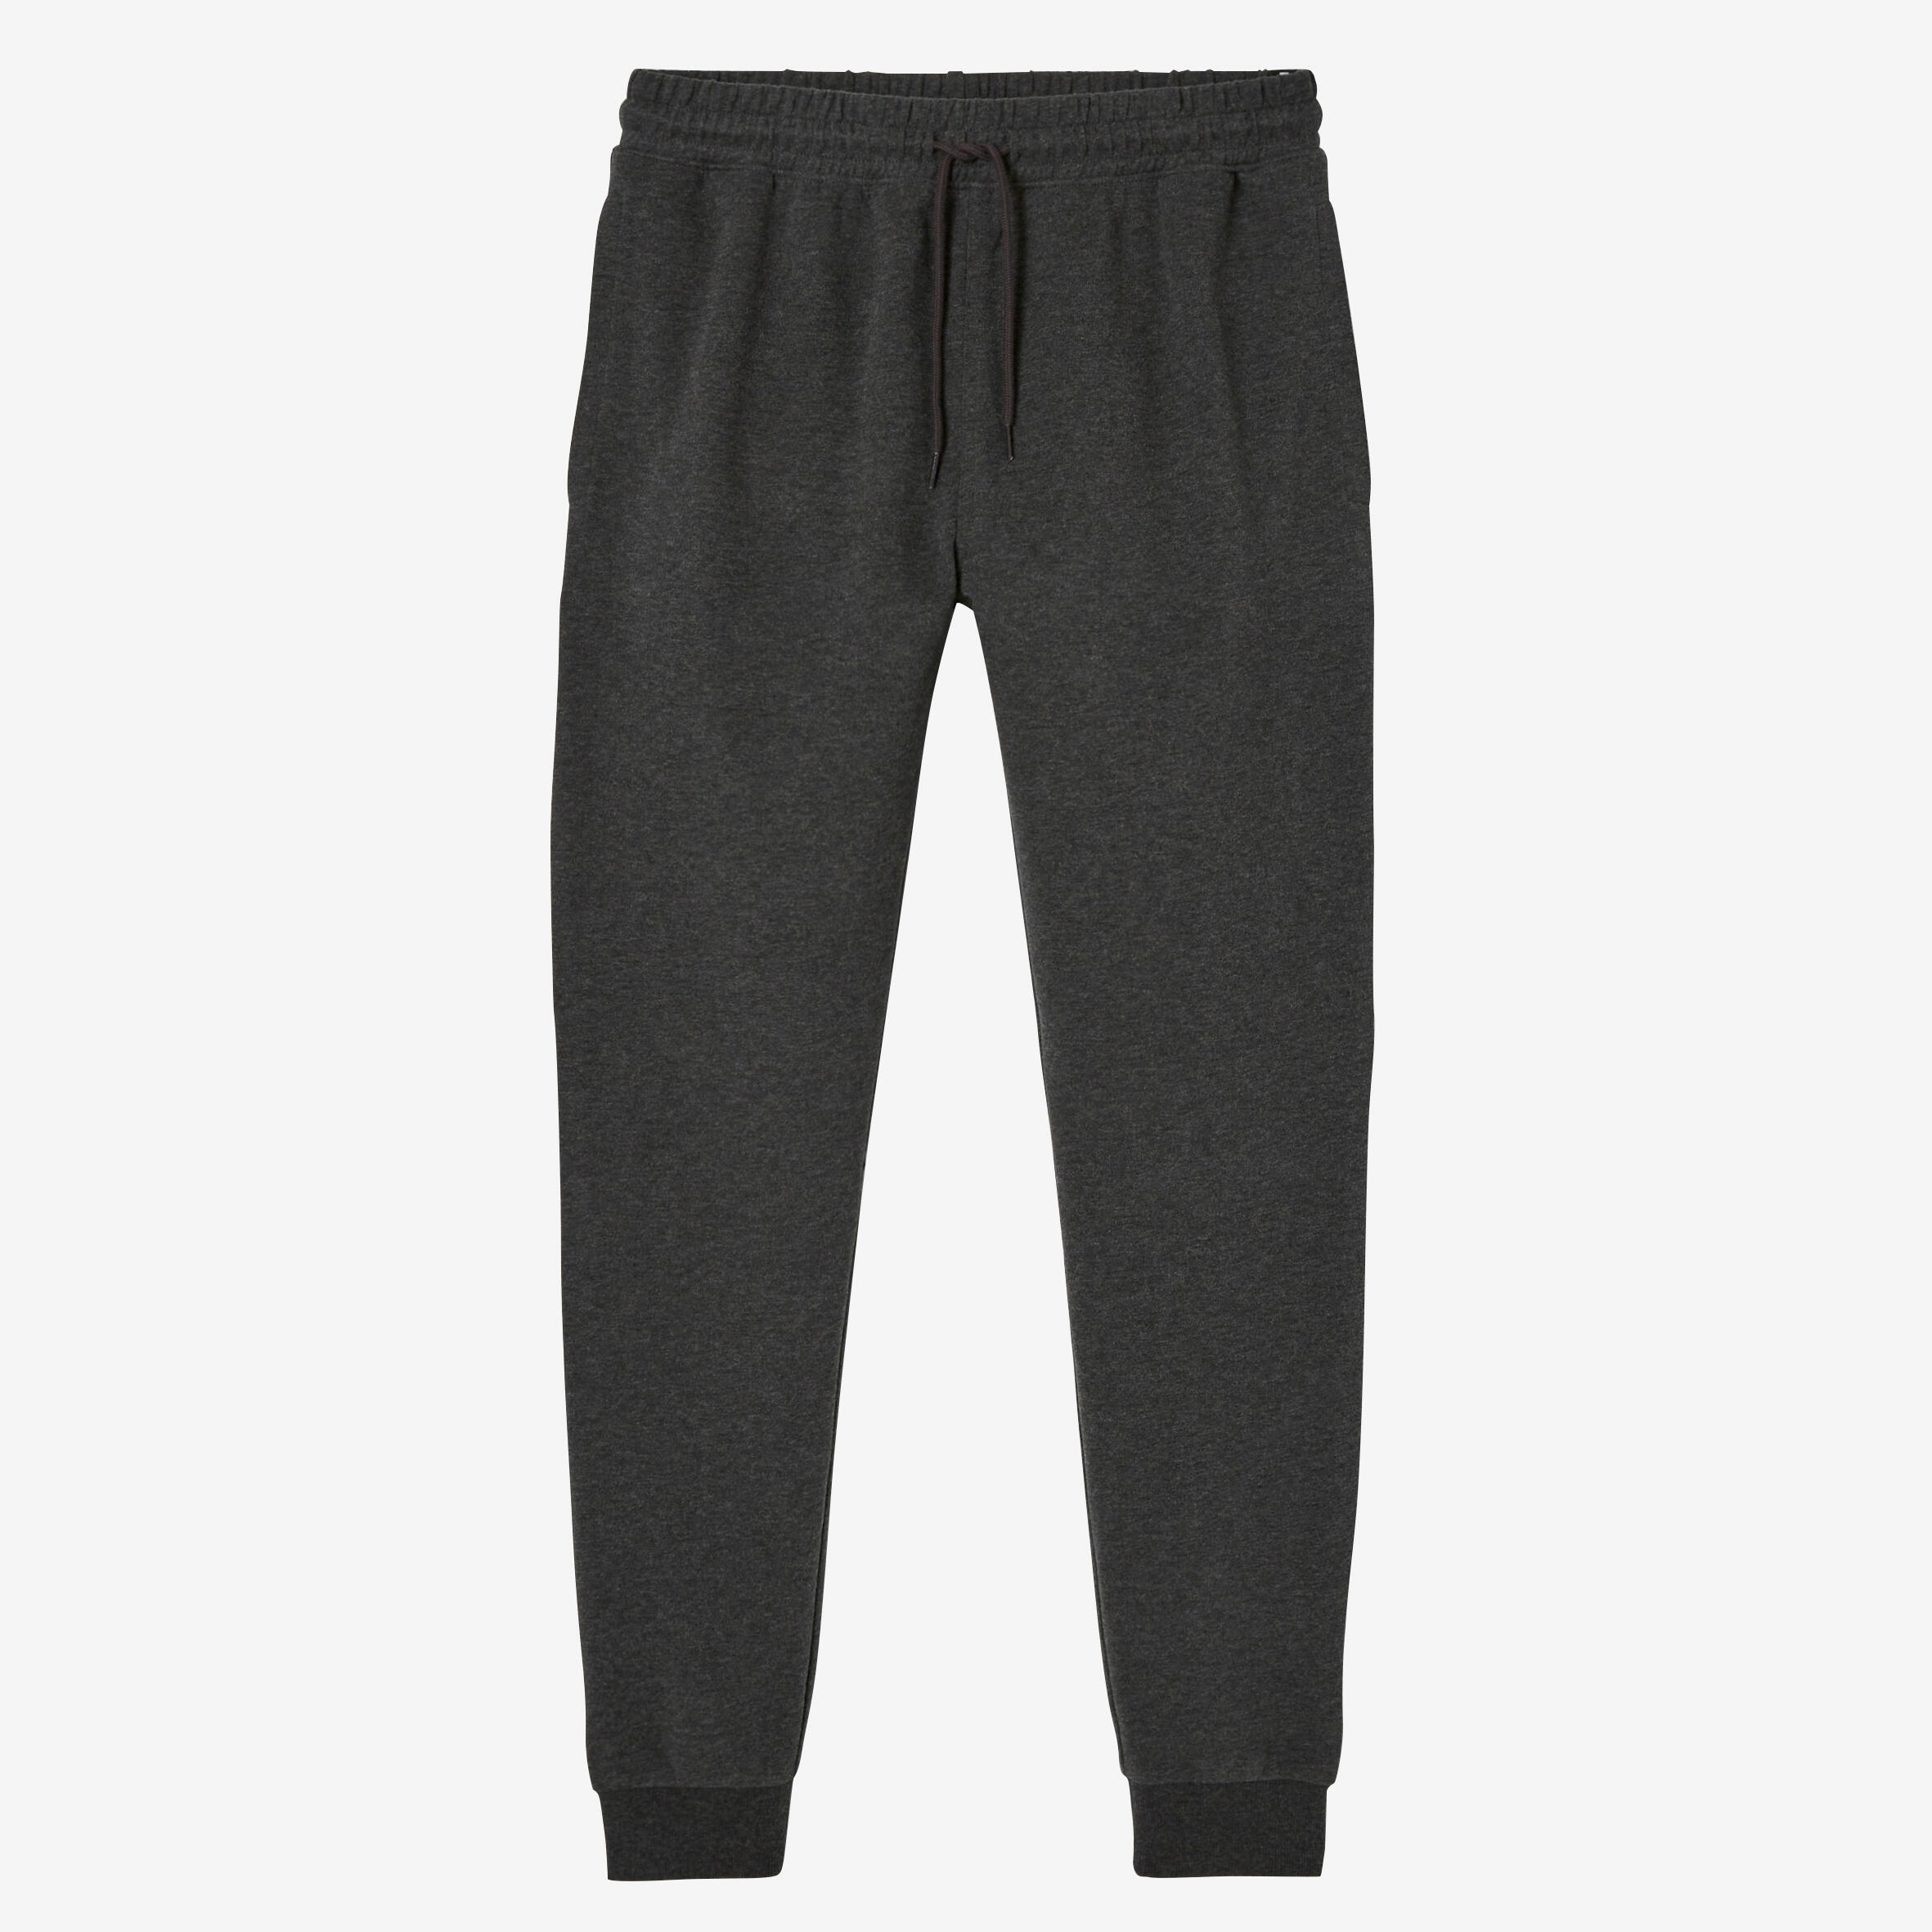 Mens pants joggers P1037  dark grey  MODONE wholesale  Clothing For Men